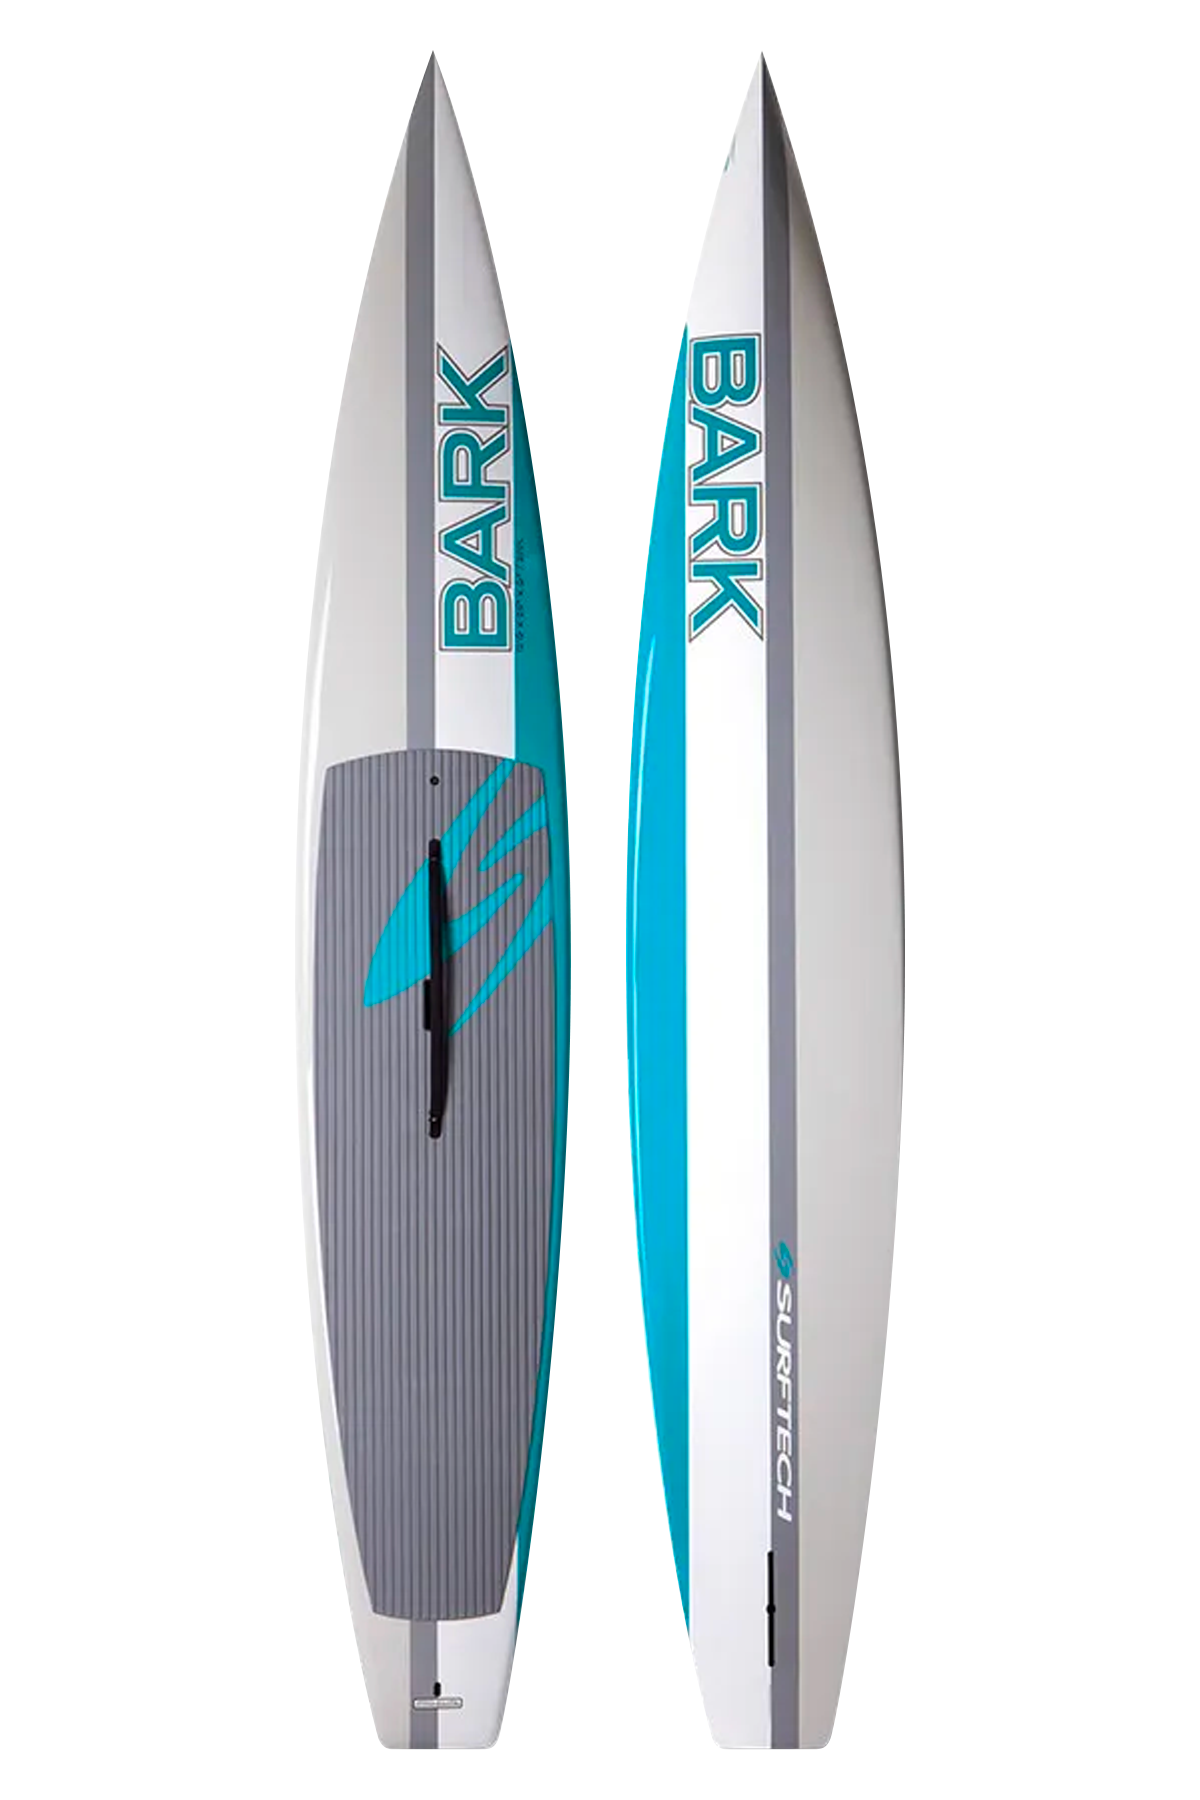 12'6 SURFTECH SUP CONTENDER RACE - BARK ELITE - 25"